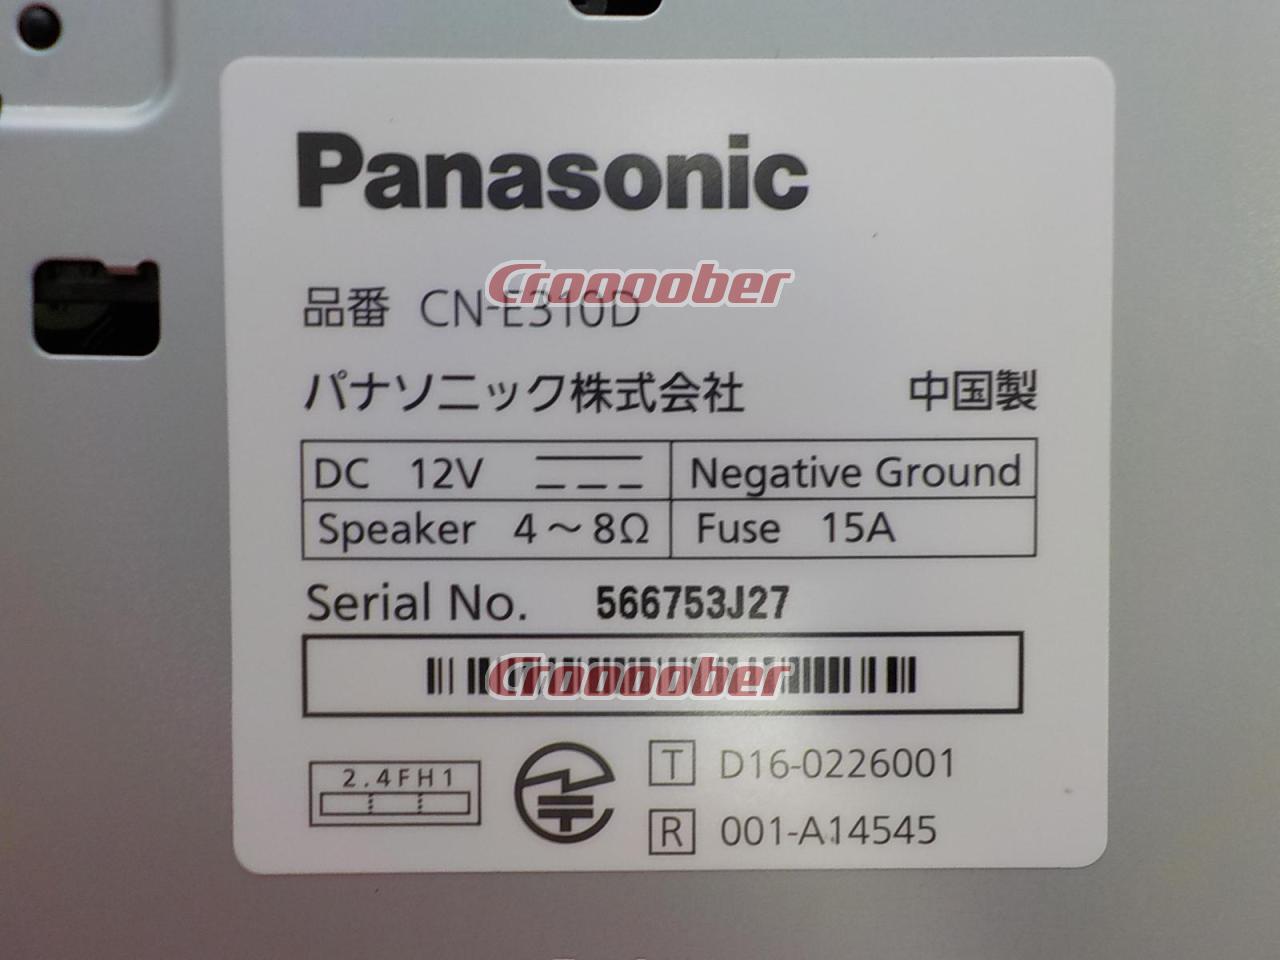 Panasonic CN-E310D 2019 Model With New Film / One Segment 